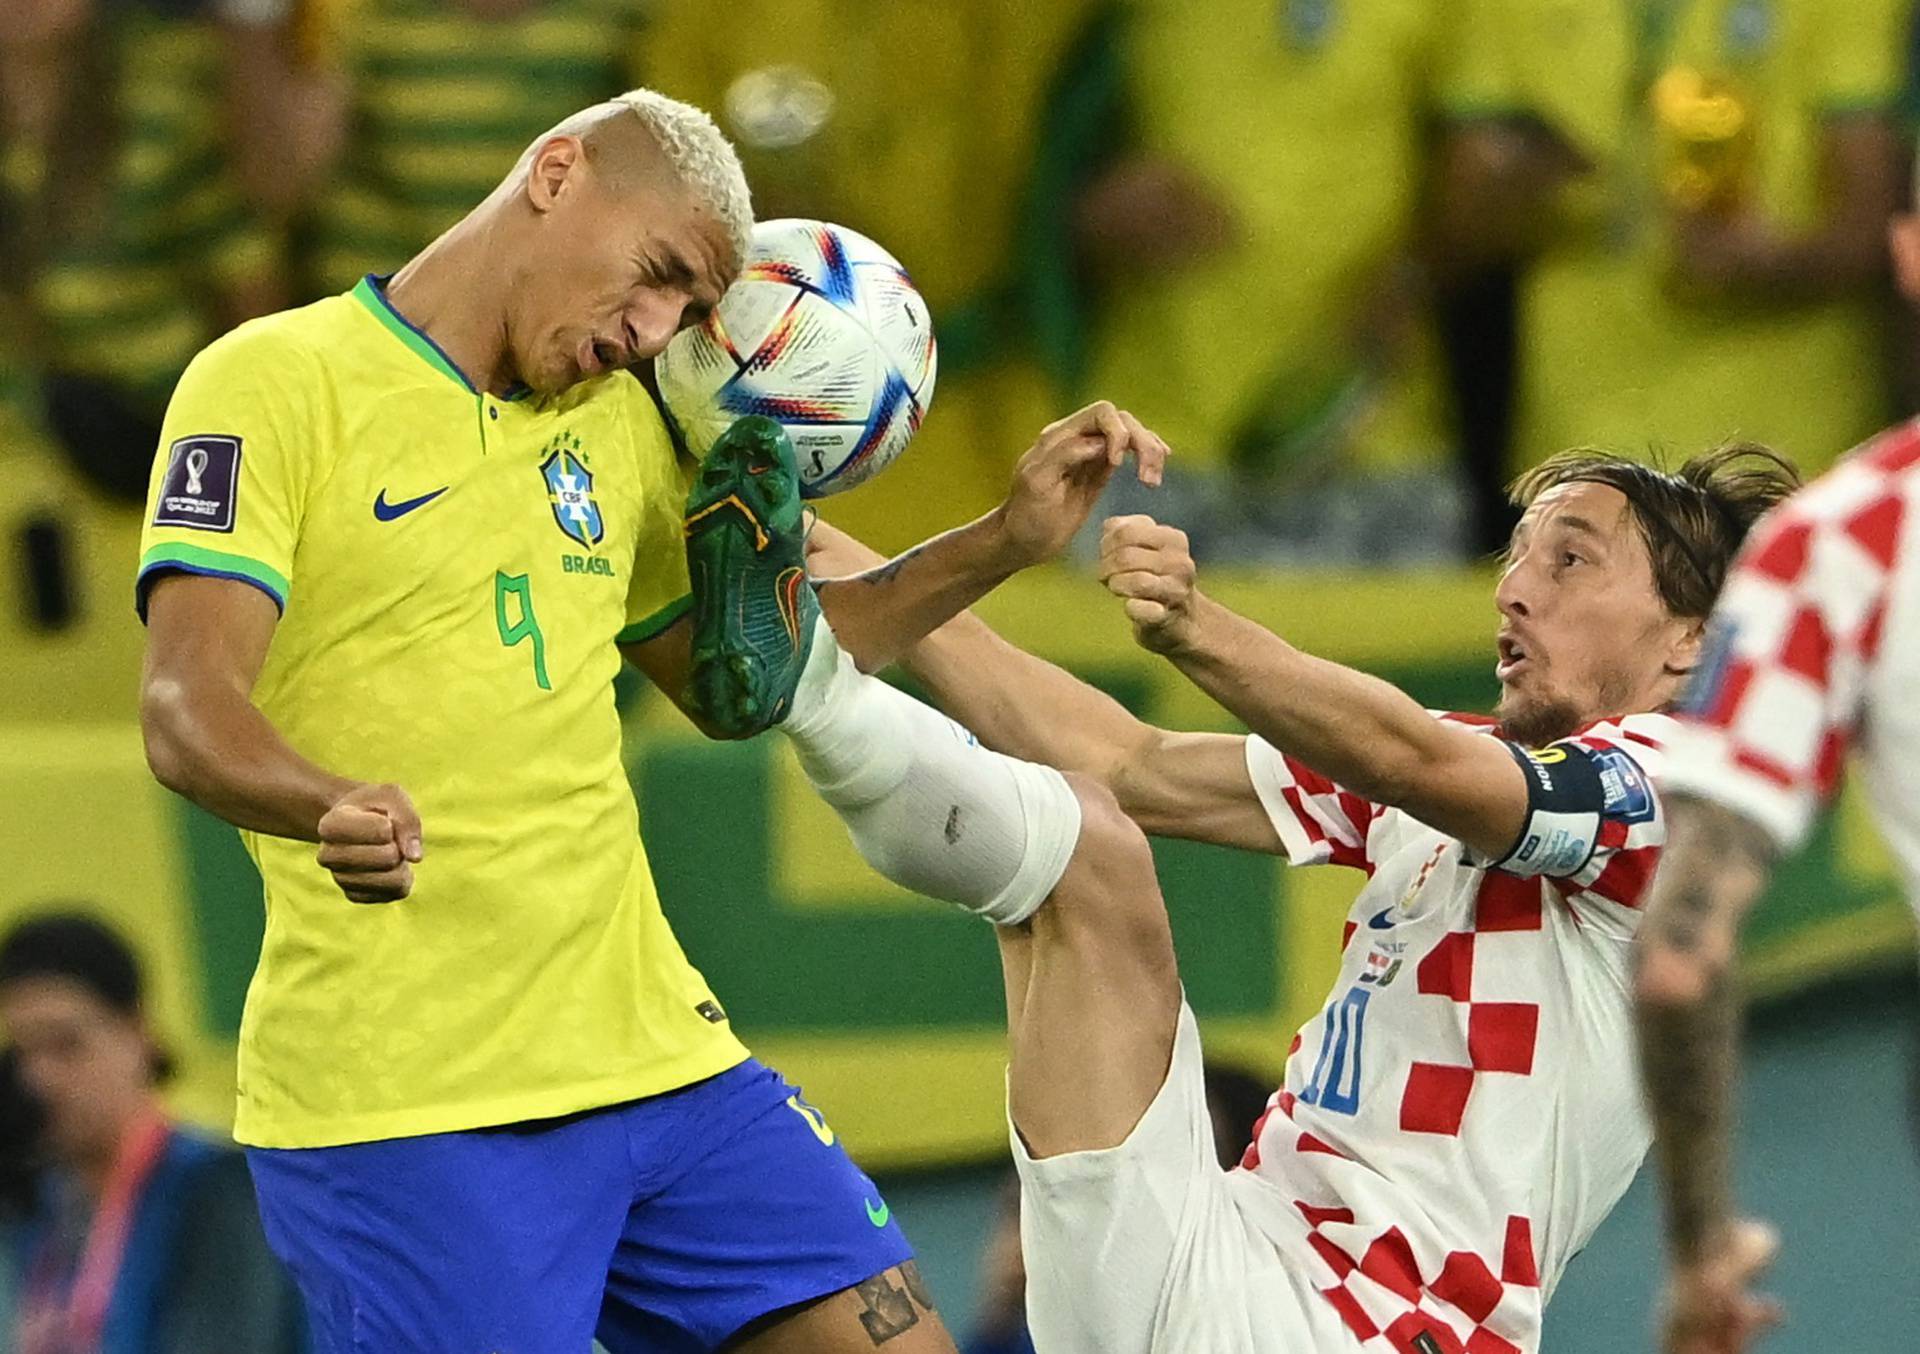 FIFA World Cup Qatar 2022 - Quarter Final - Croatia v Brazil